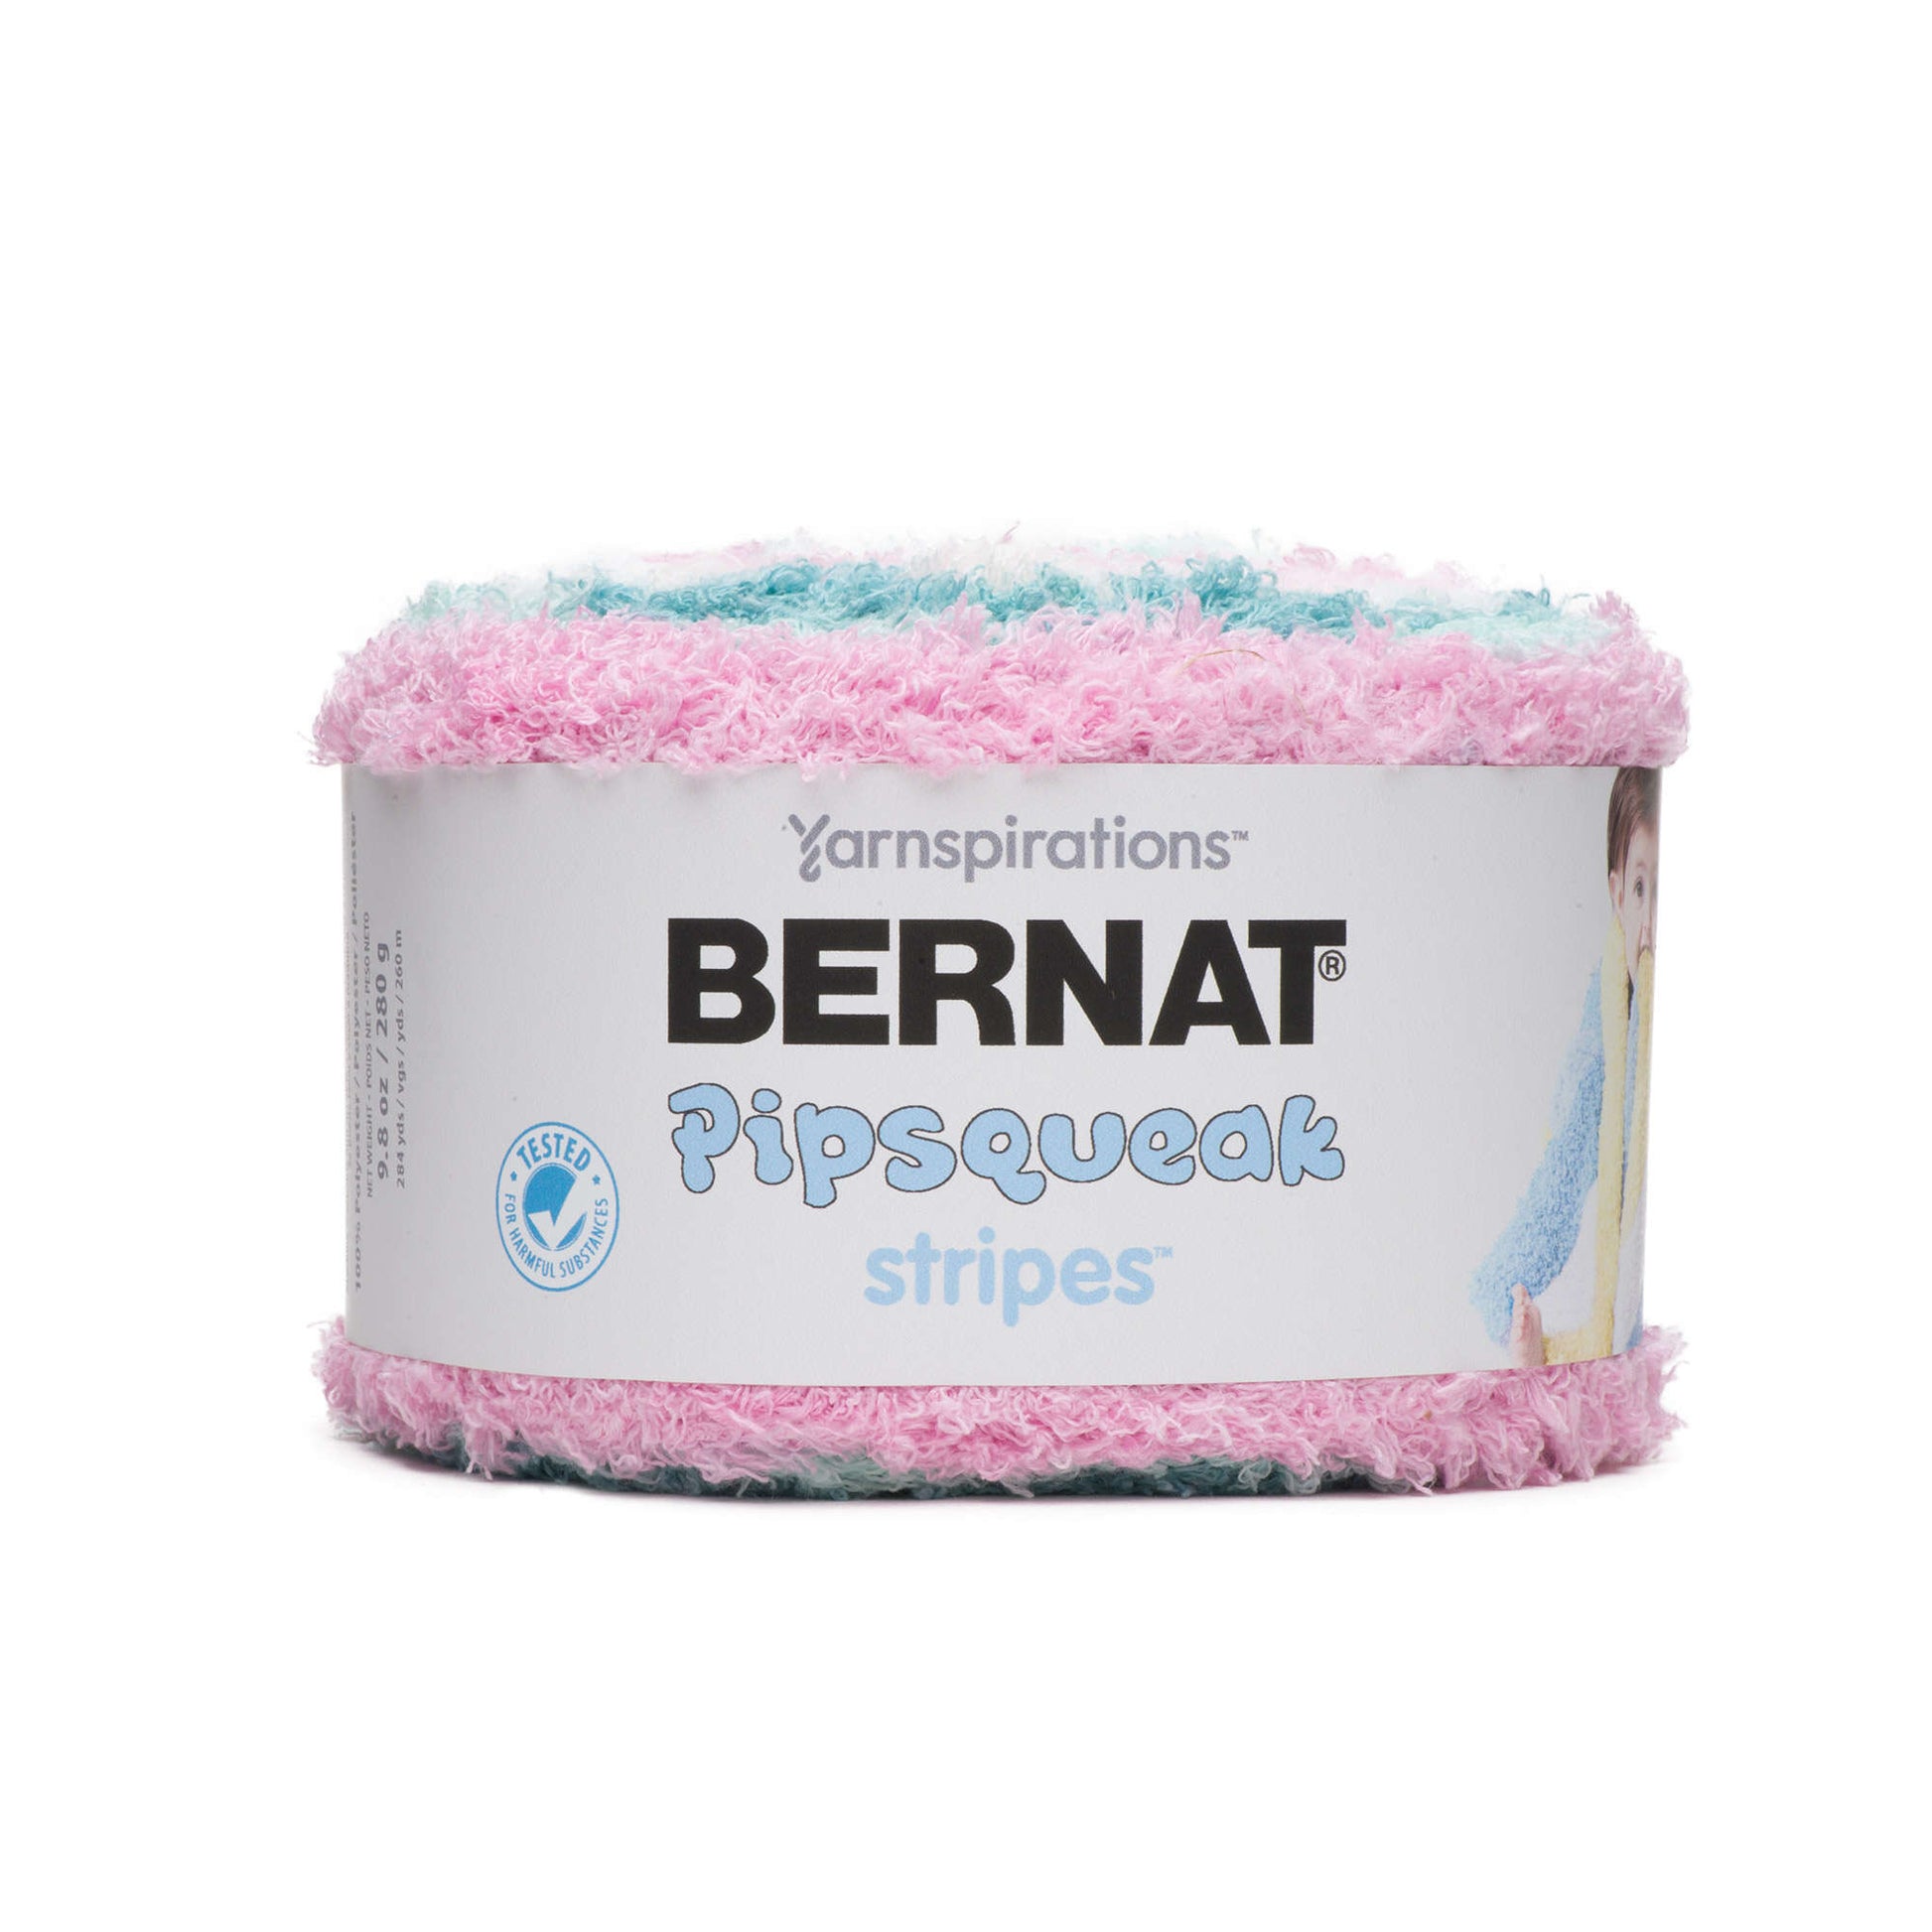 Bernat Pipsqueak Stripes Yarn - Discontinued Shades